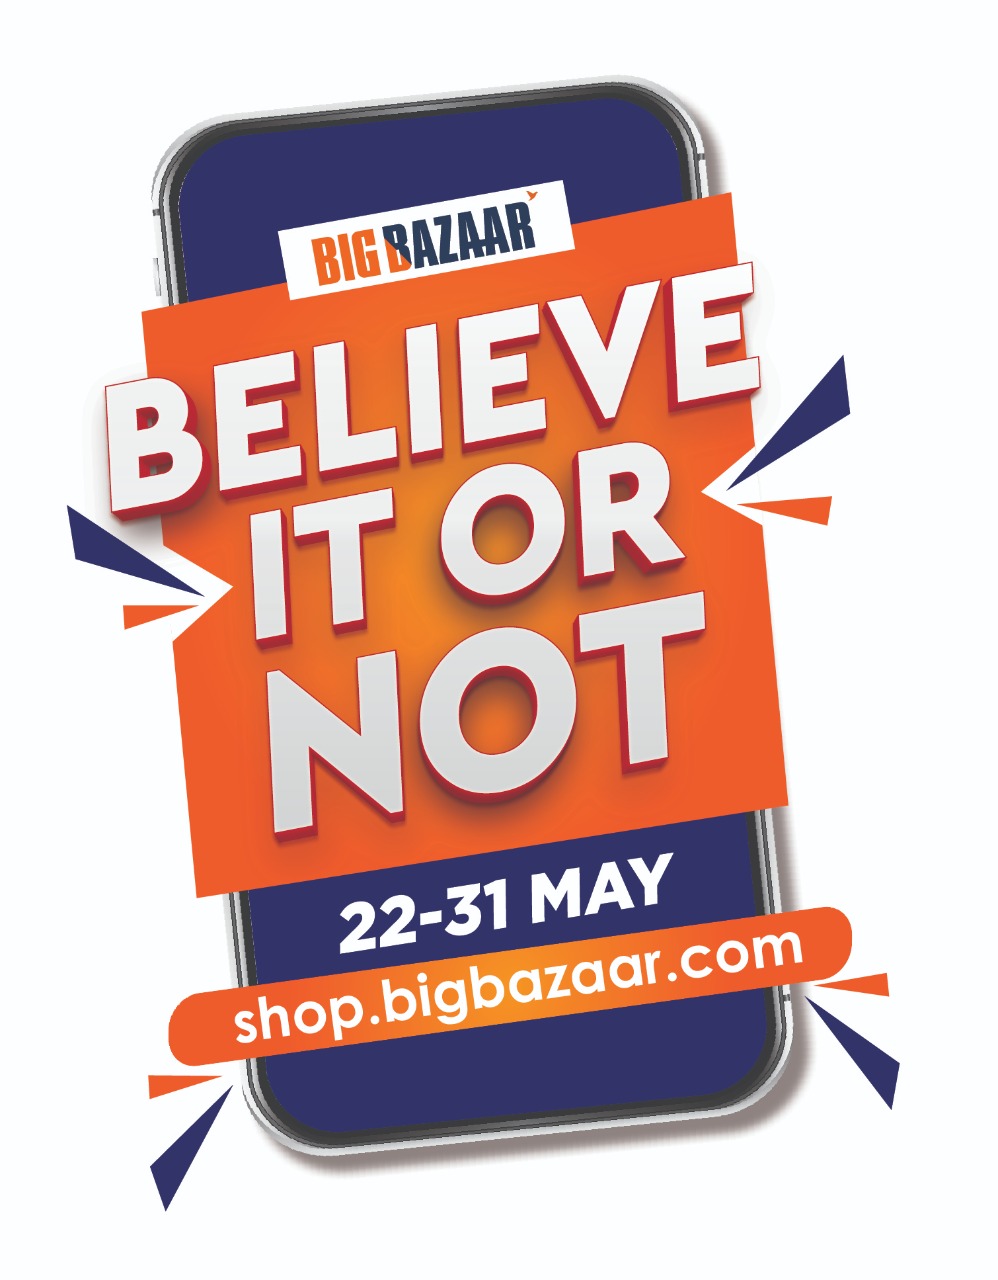 Nation’s Biggest Offer by Big Bazaar Believe it or not!